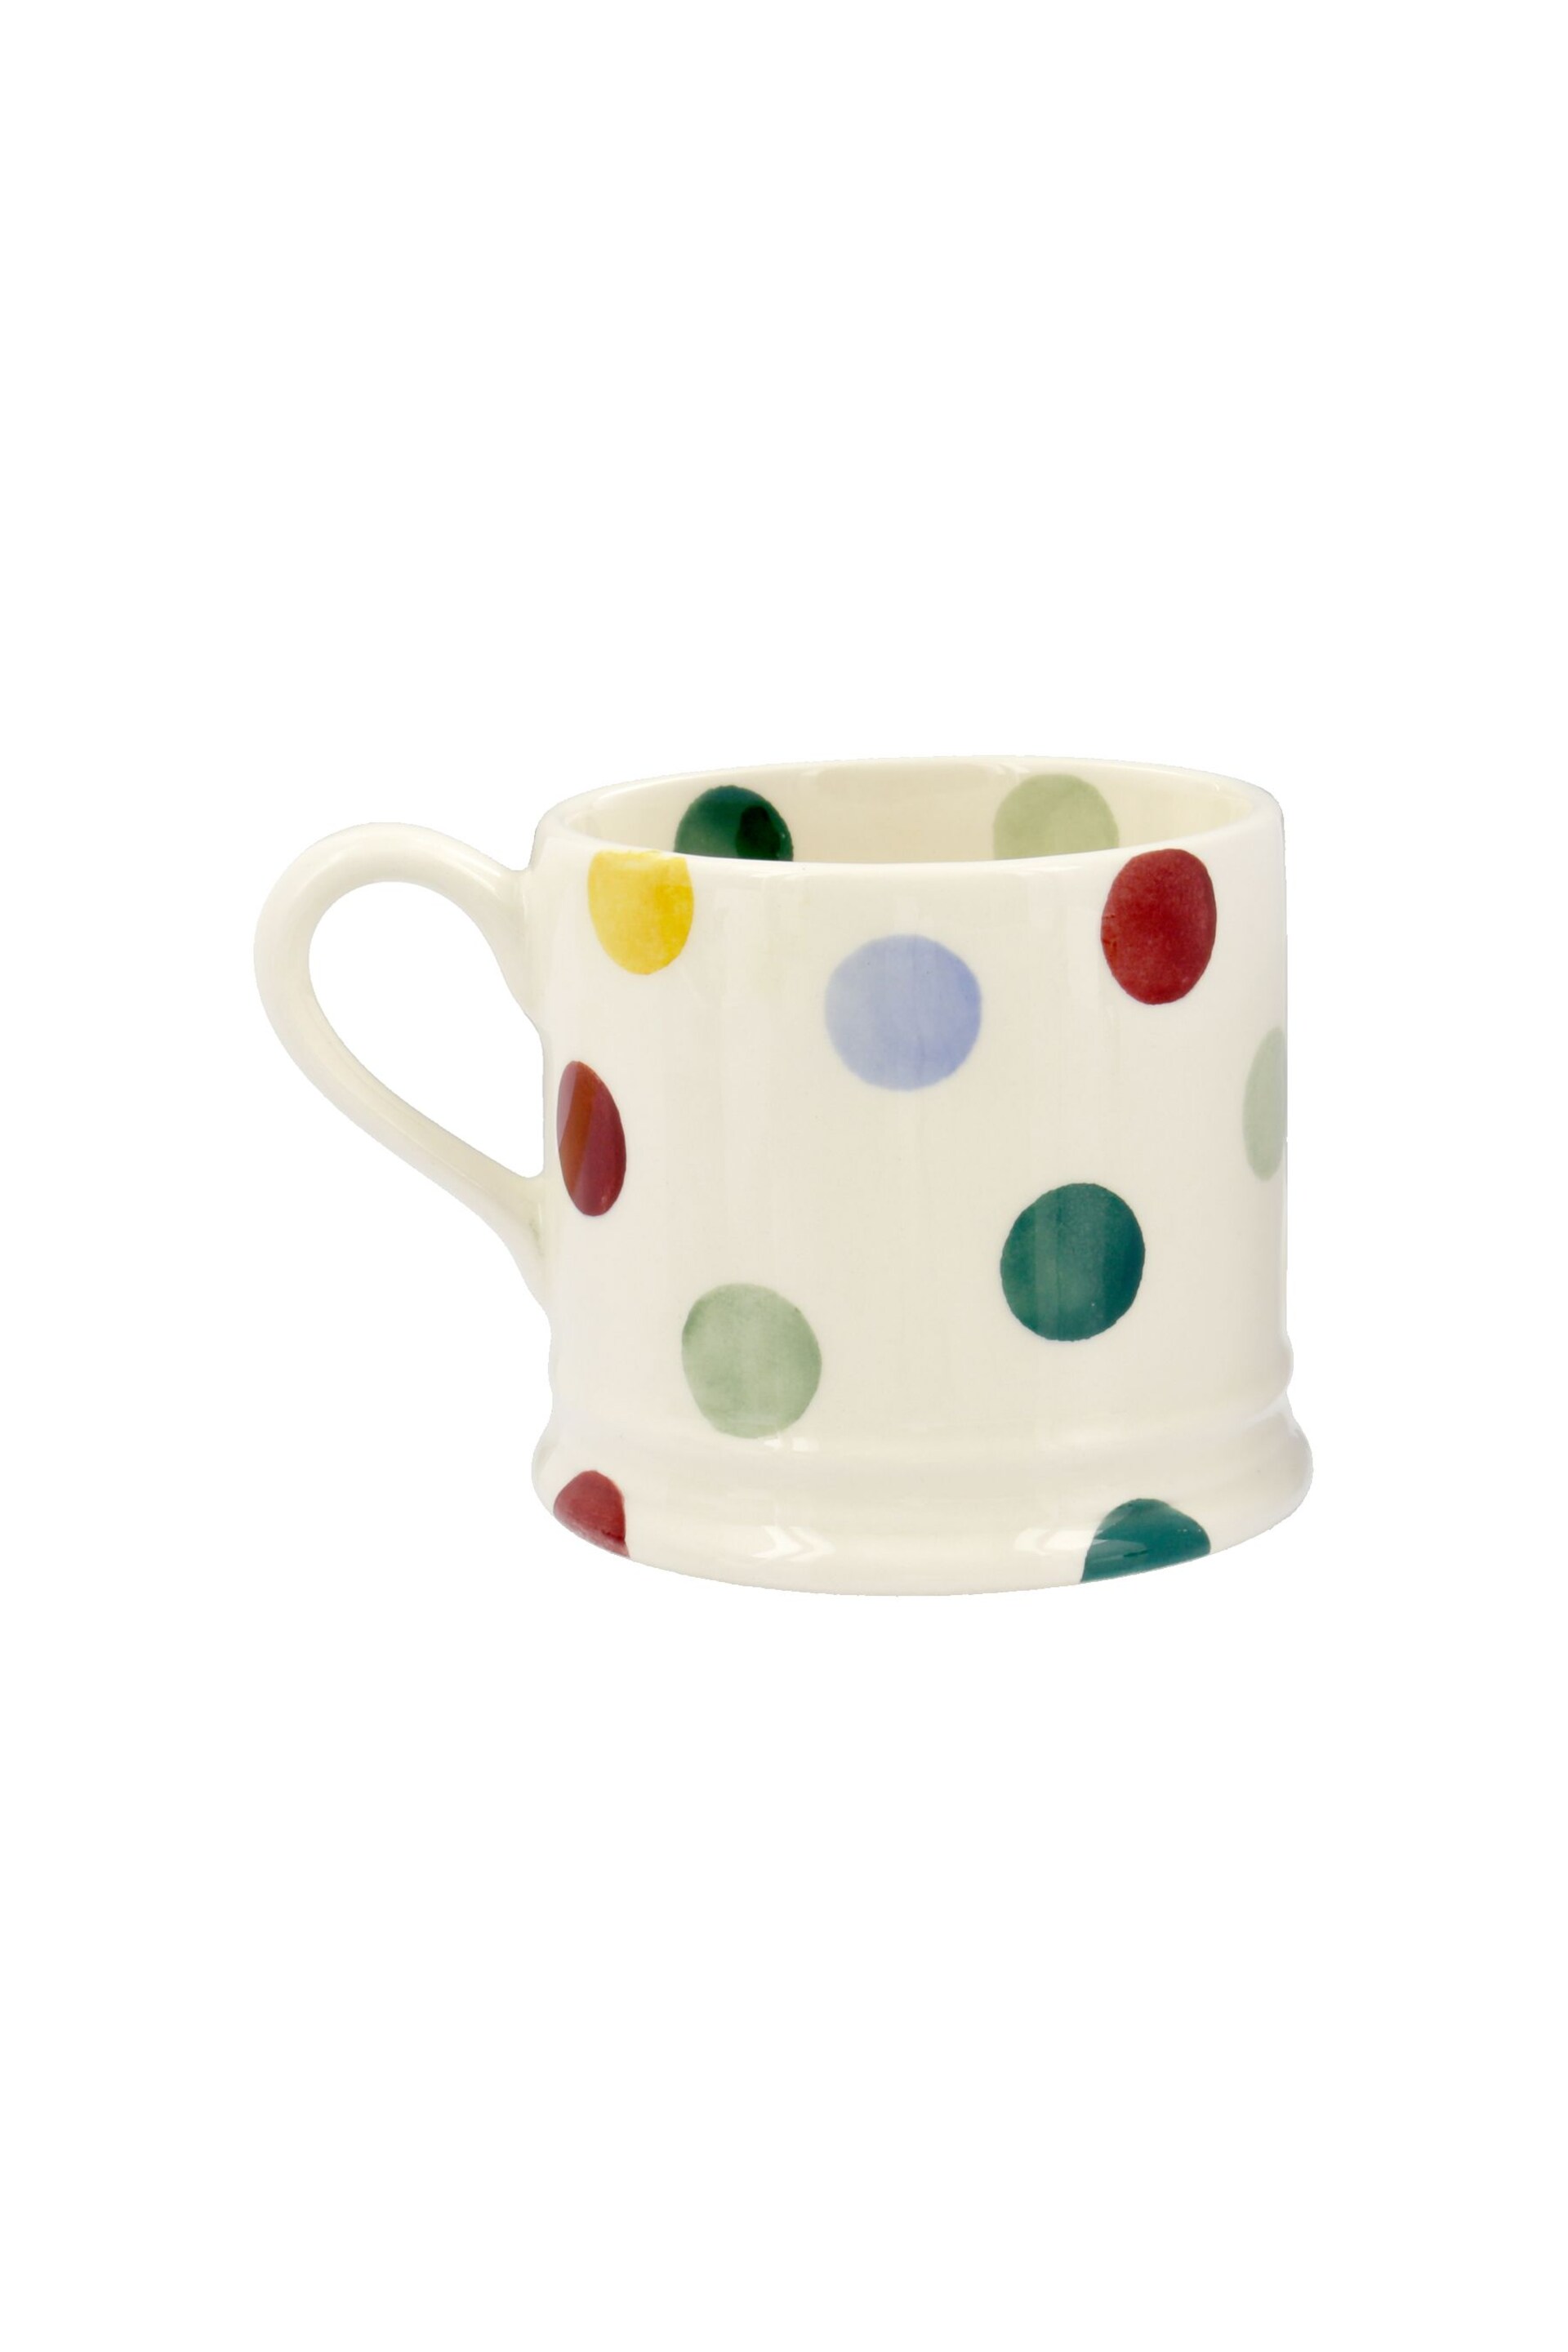 Emma Bridgewater Cream Polka Dot Small Mug - Image 4 of 4